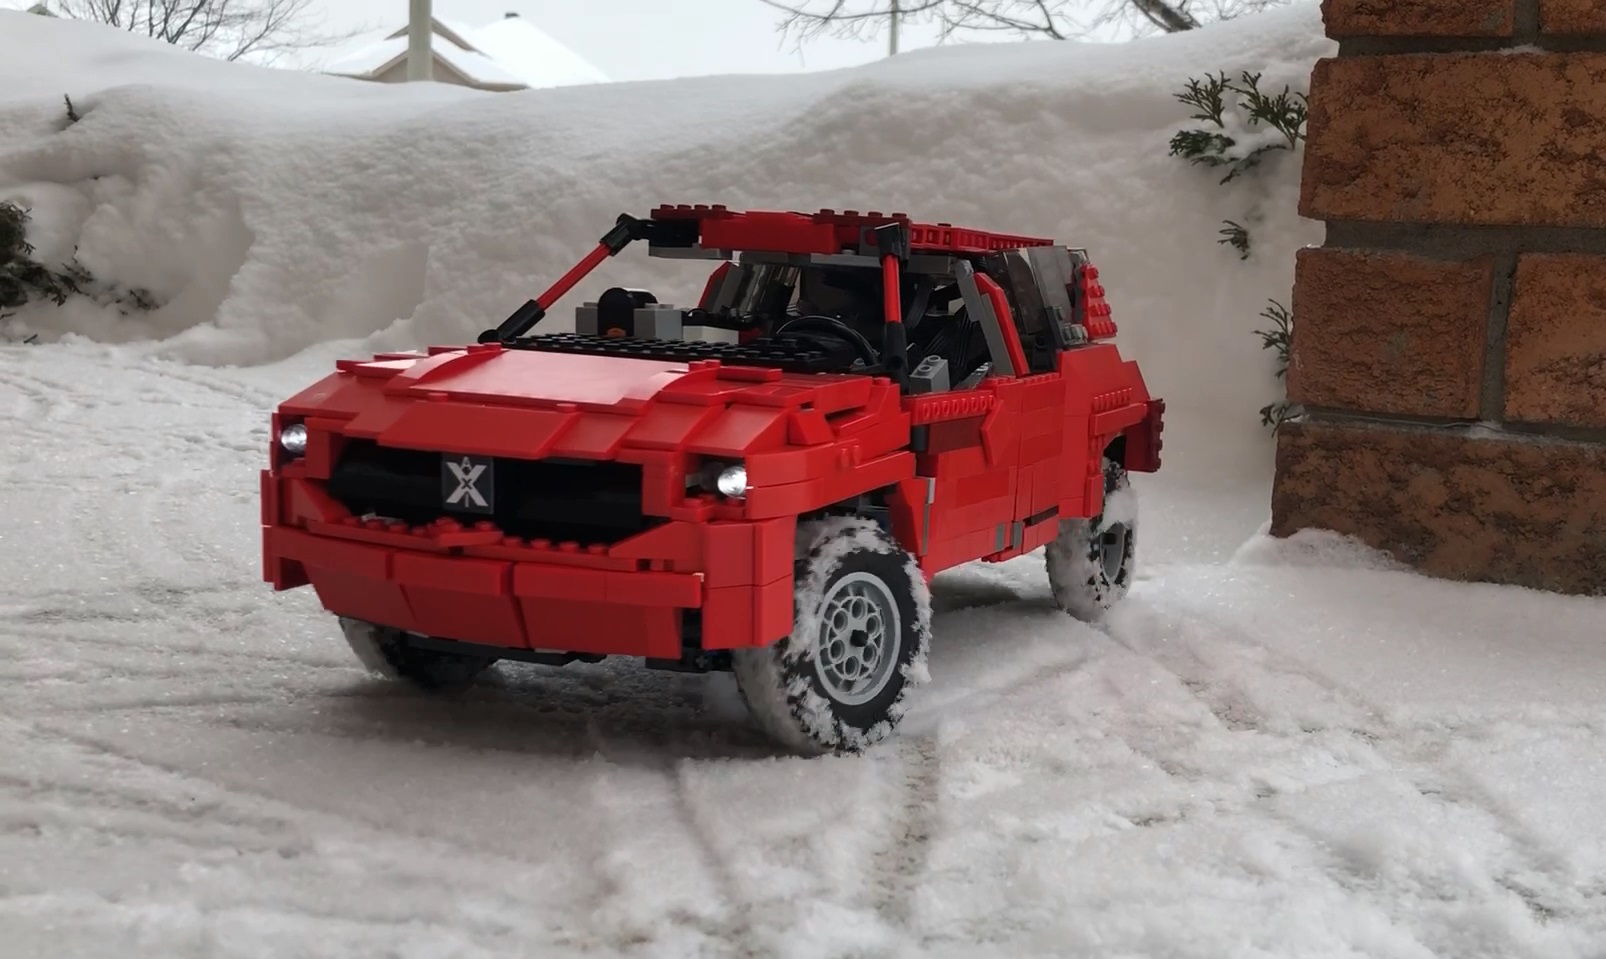 2019 Phantom AWD in snow